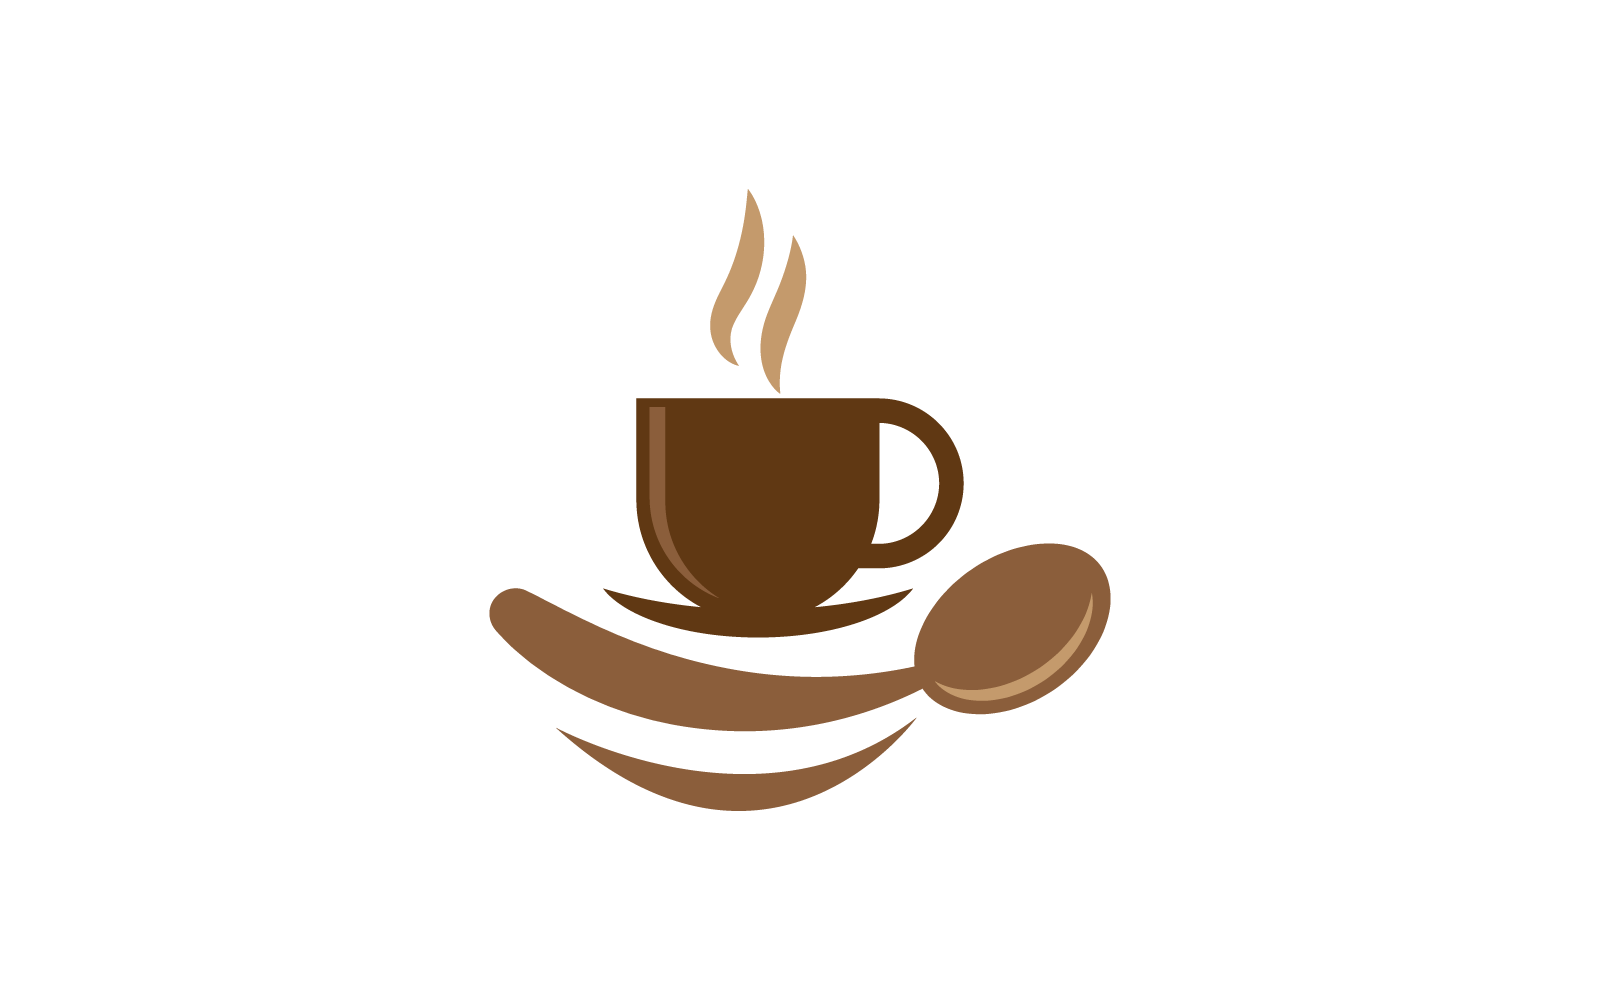 Food Coffee cup logo template vector flat design